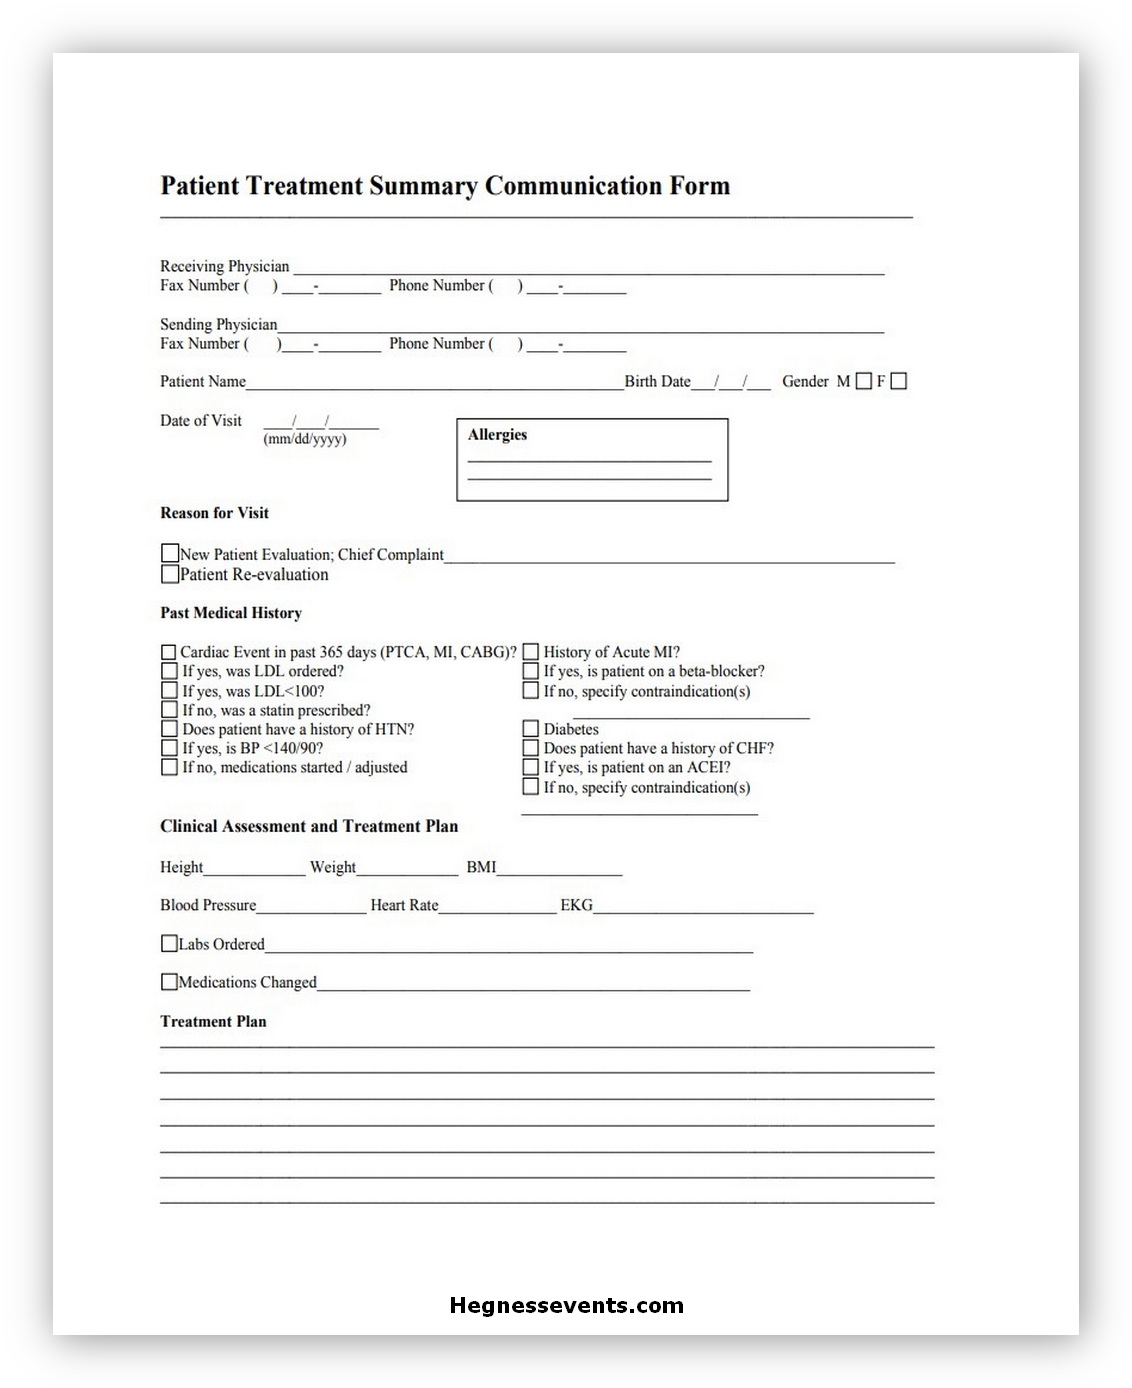 Patient Treatment Summary Communication Form